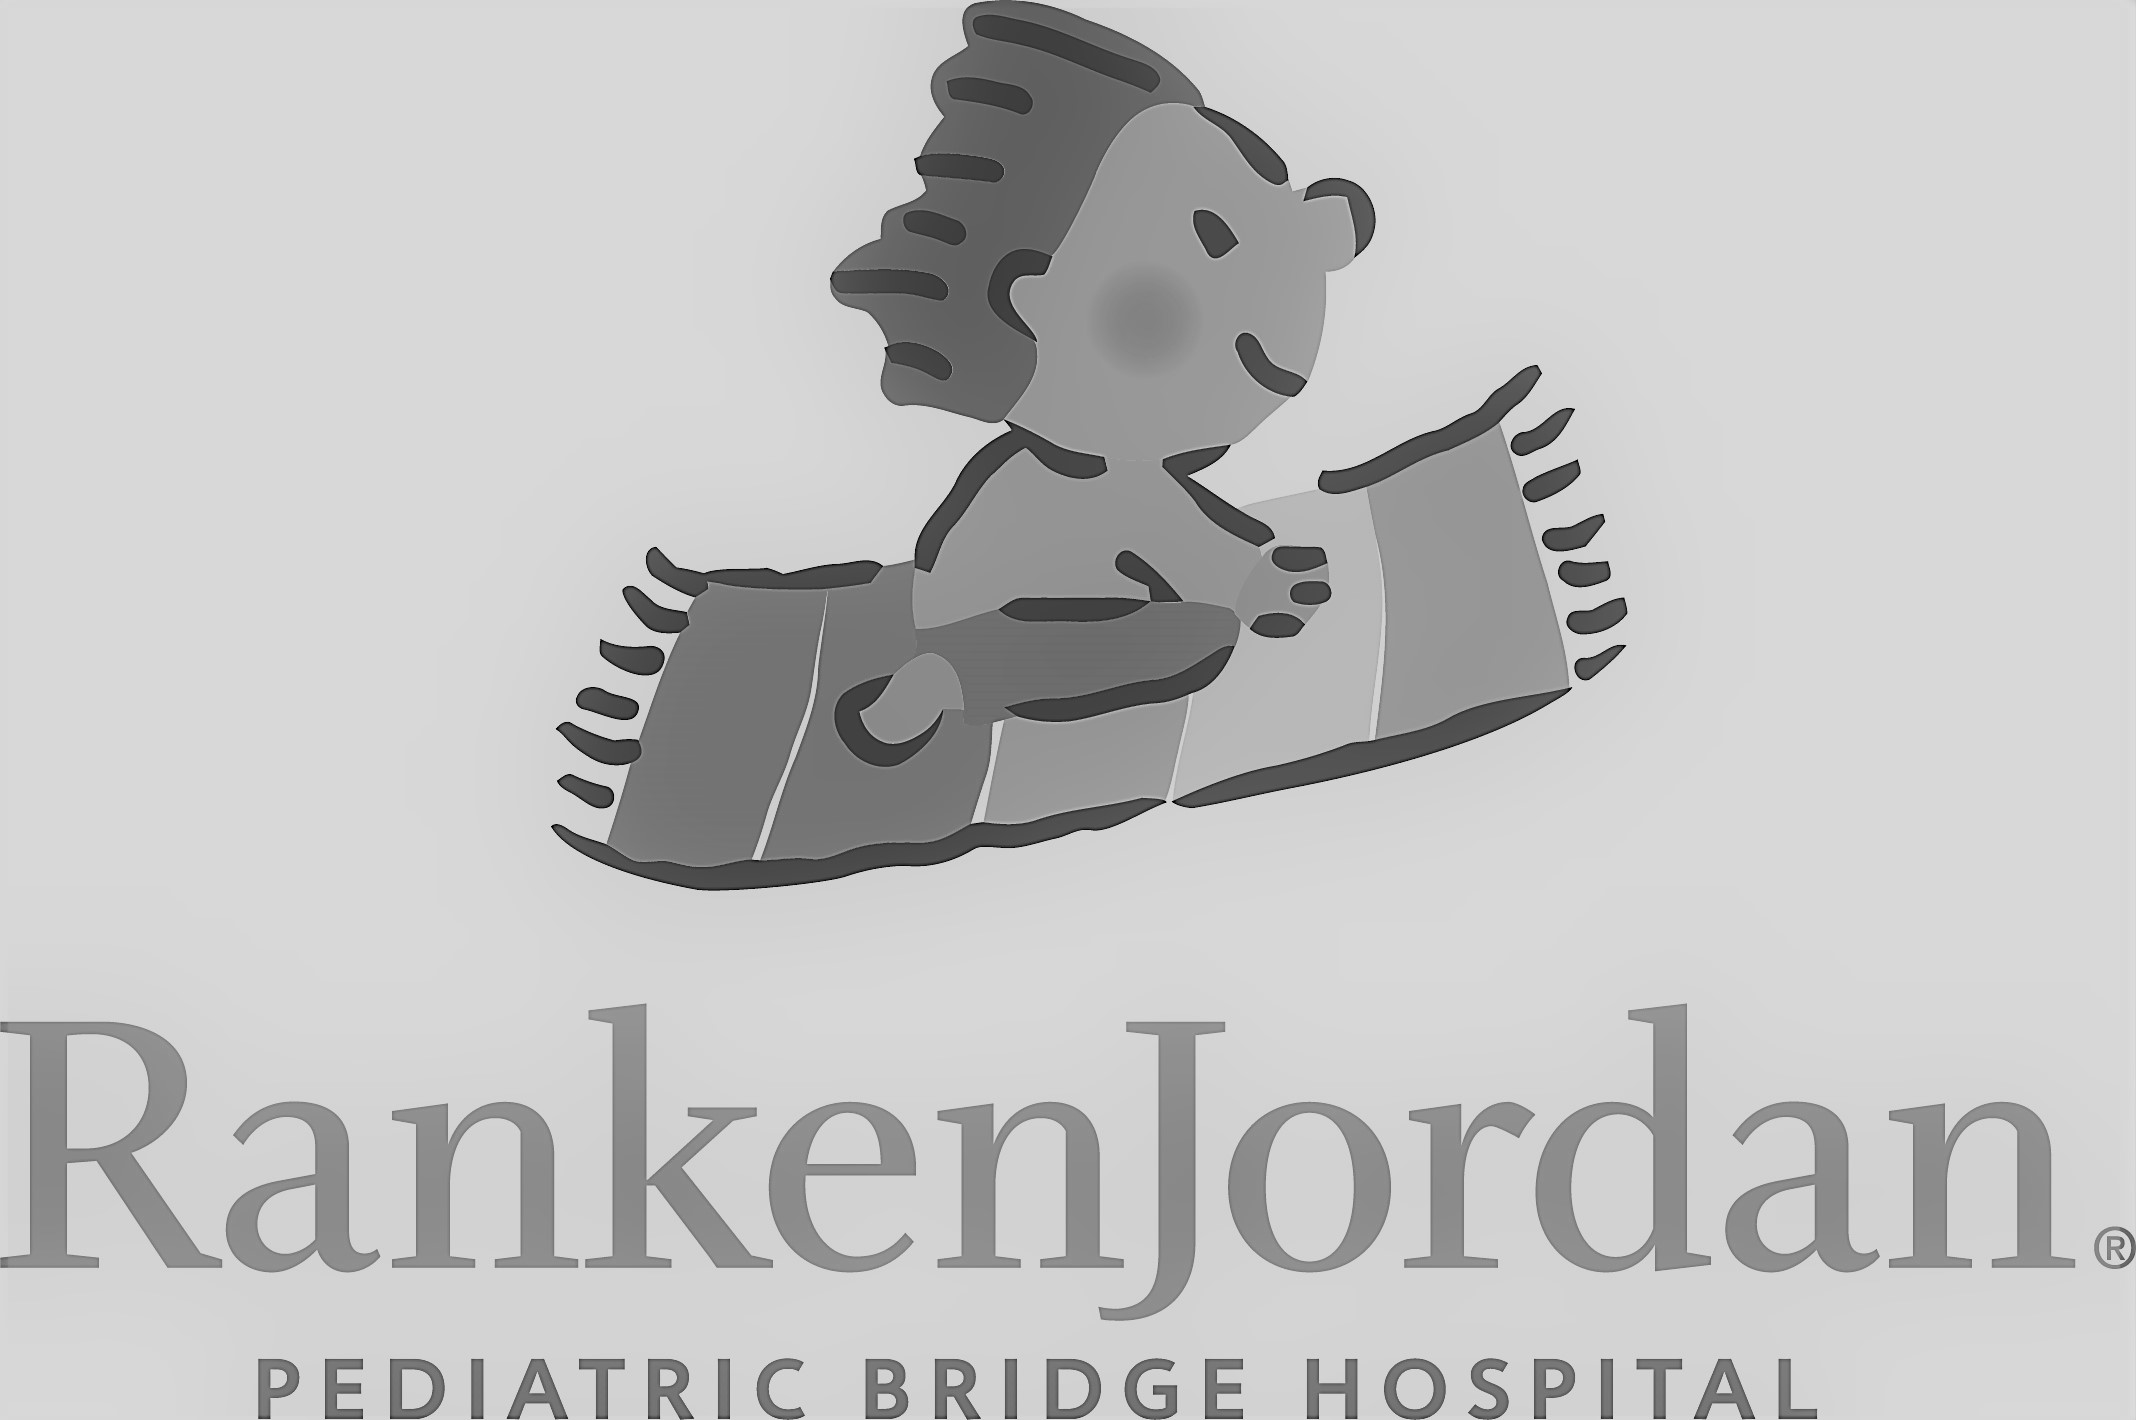 Ranken Jordan Pediatric Bridge Hospital: Where Kid